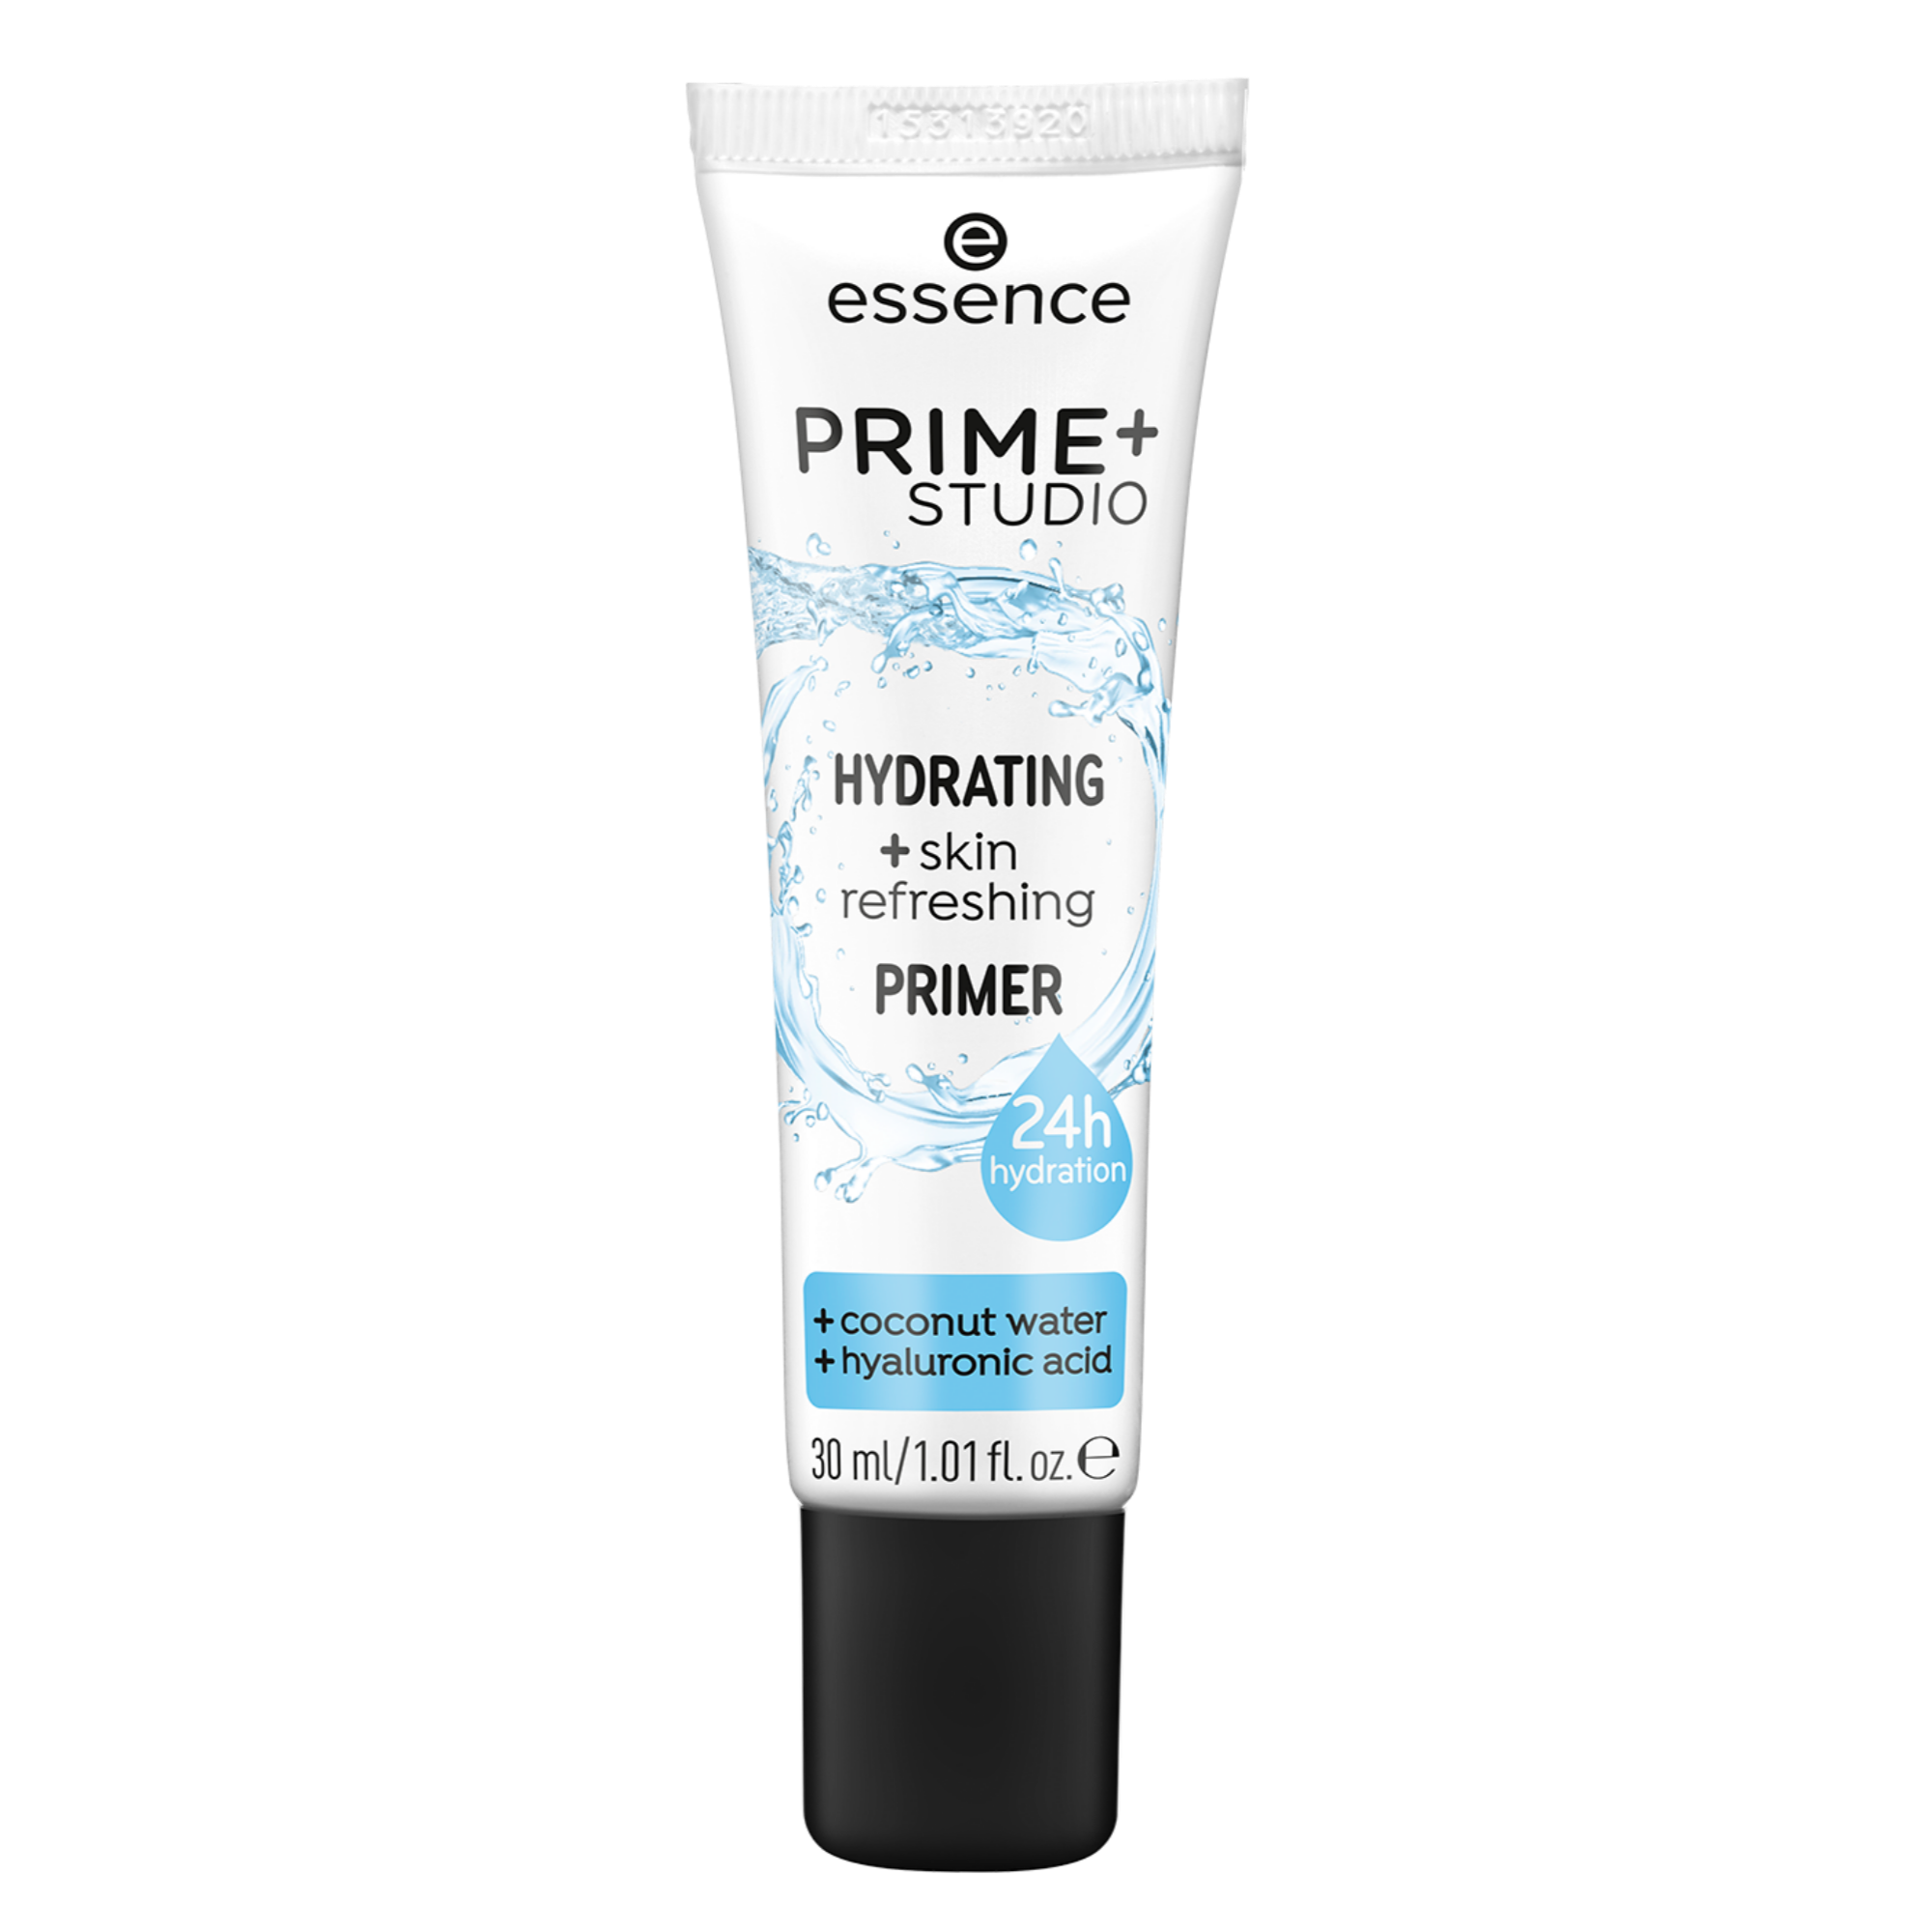 PRIME+ STUDIO HYDRATING +skin refreshing PRIMER